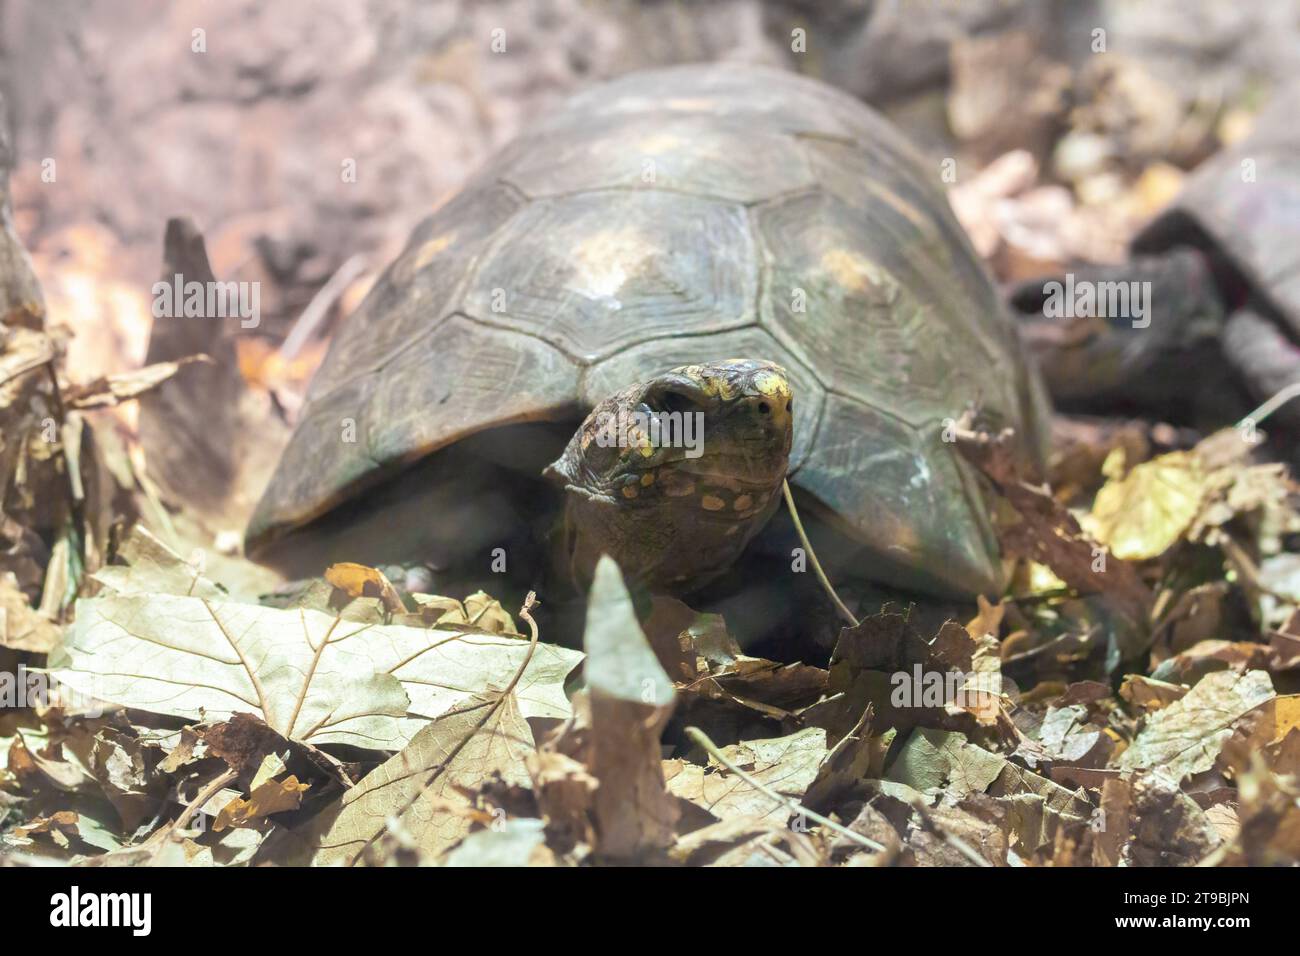 Brown Asian tortoise, wild animal in a terrarium. A rare species of ...